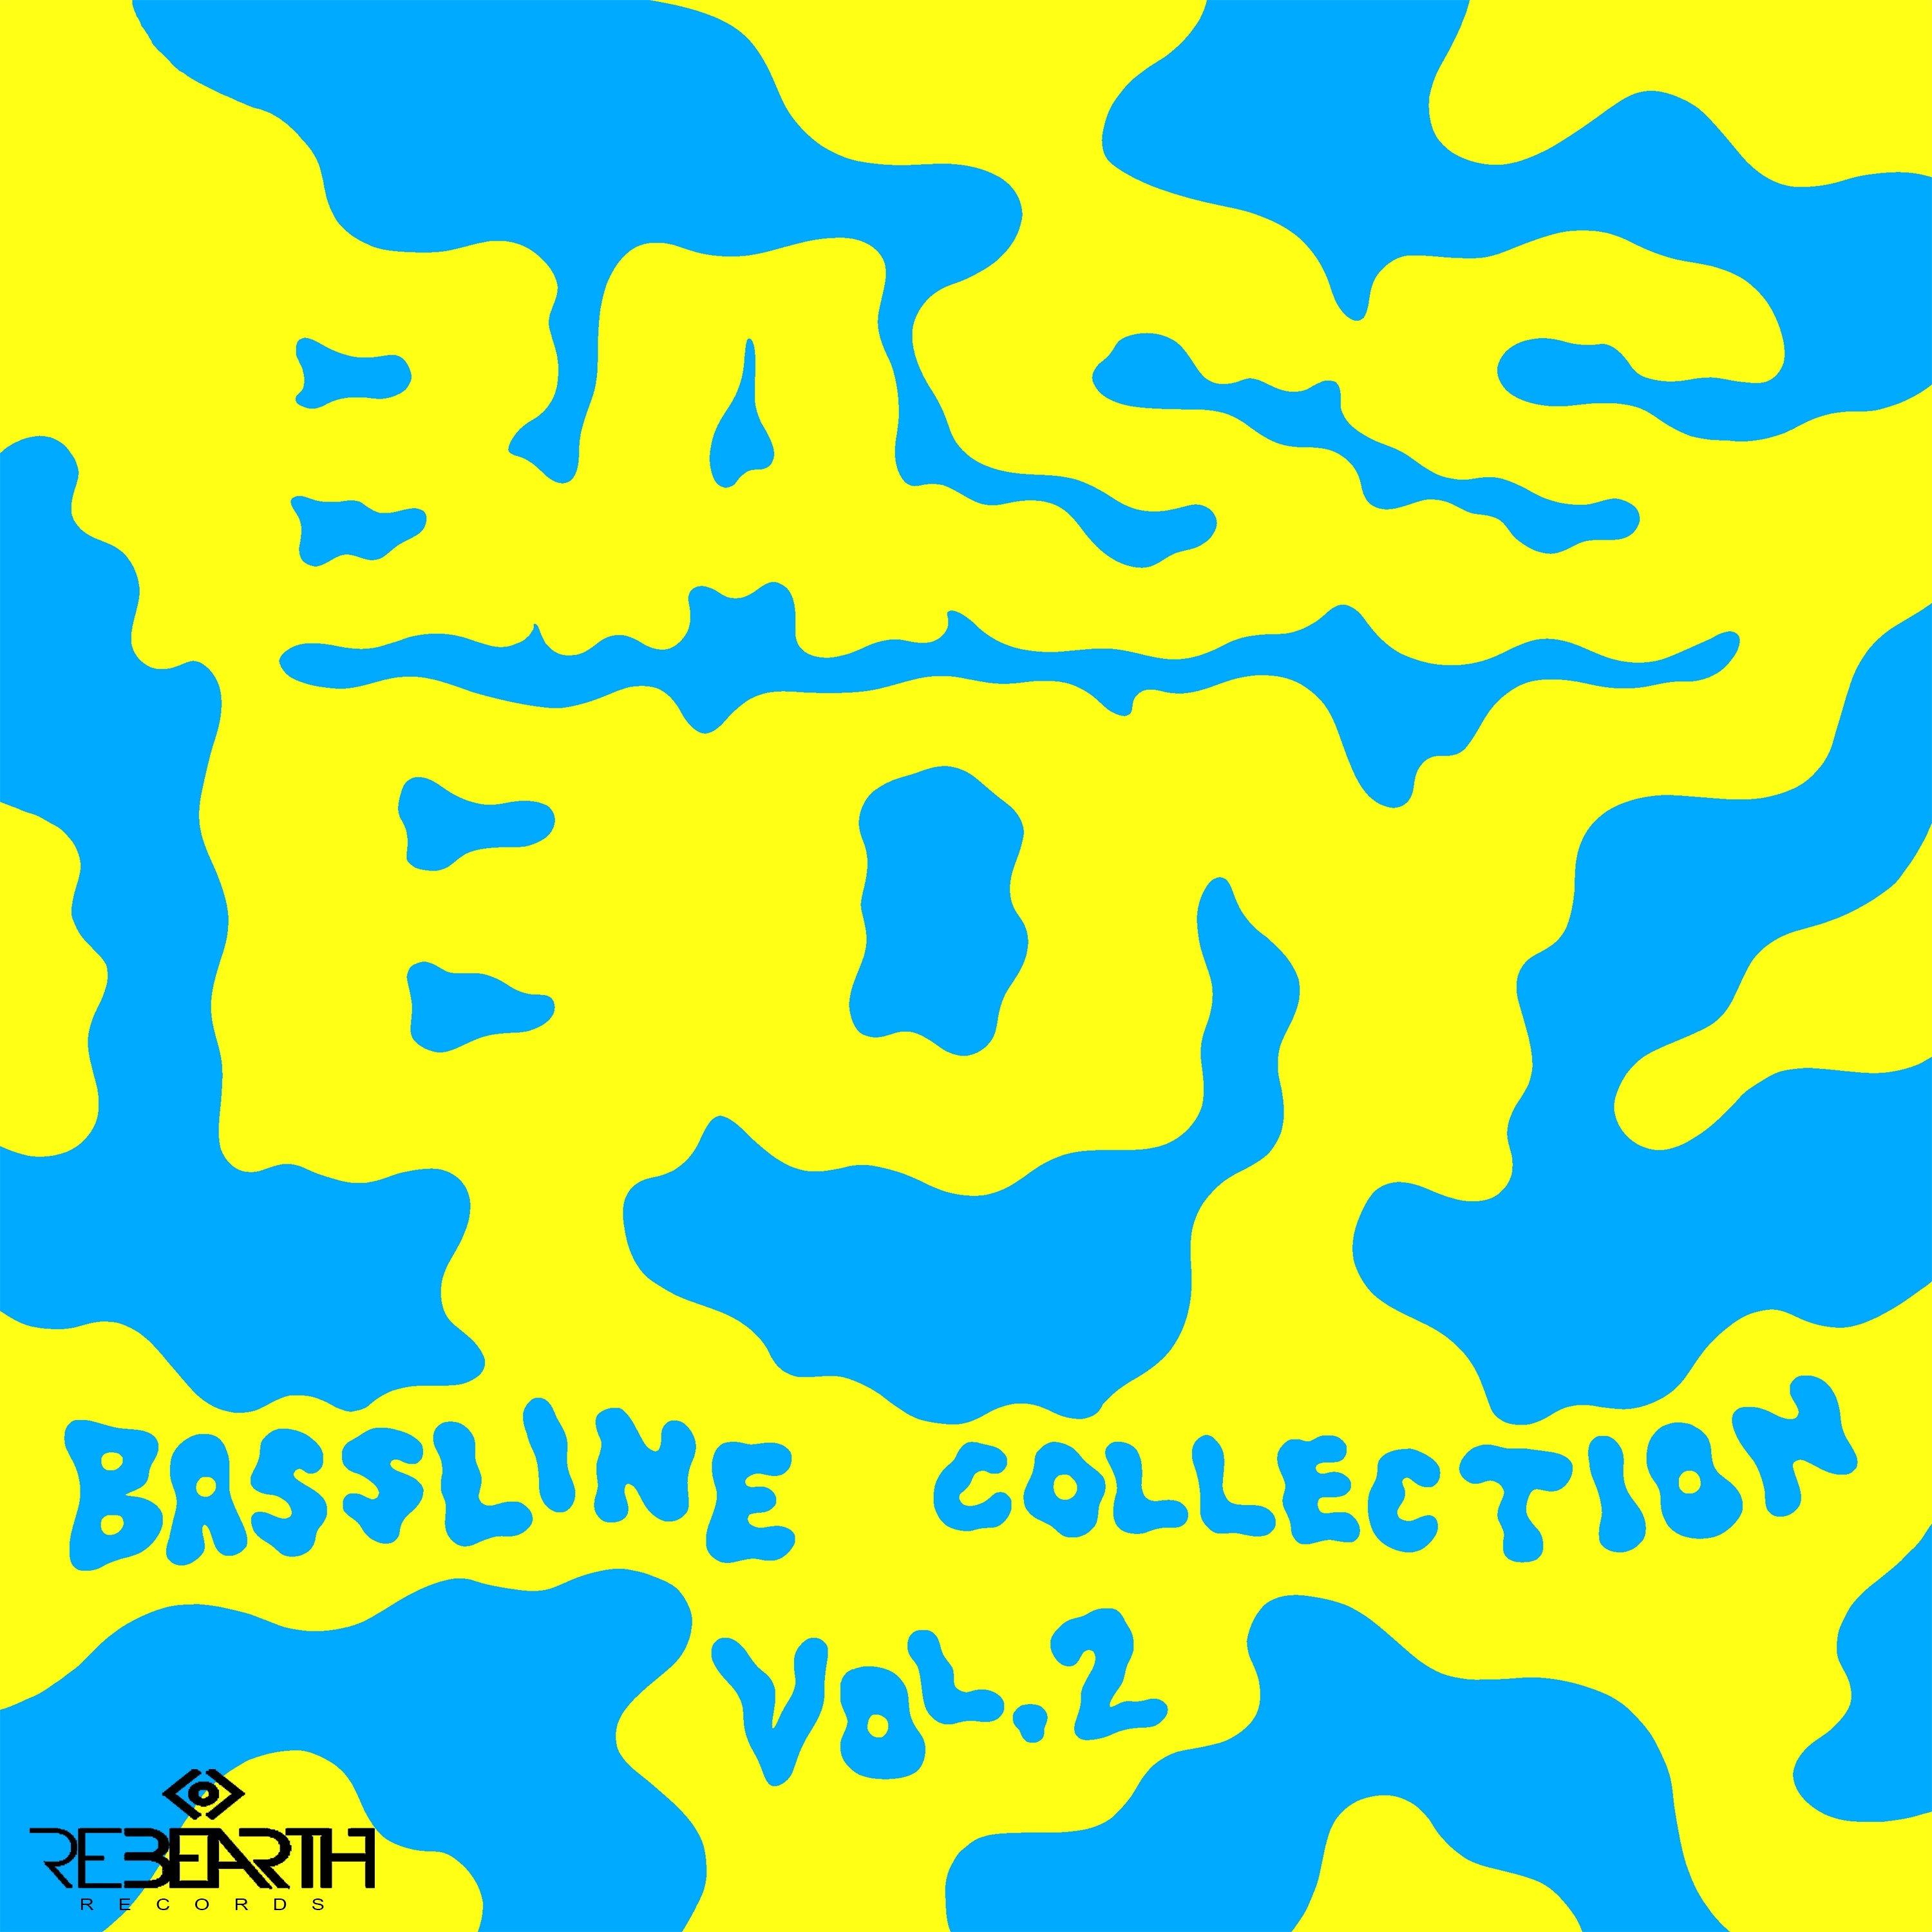 Bassboy - Do You